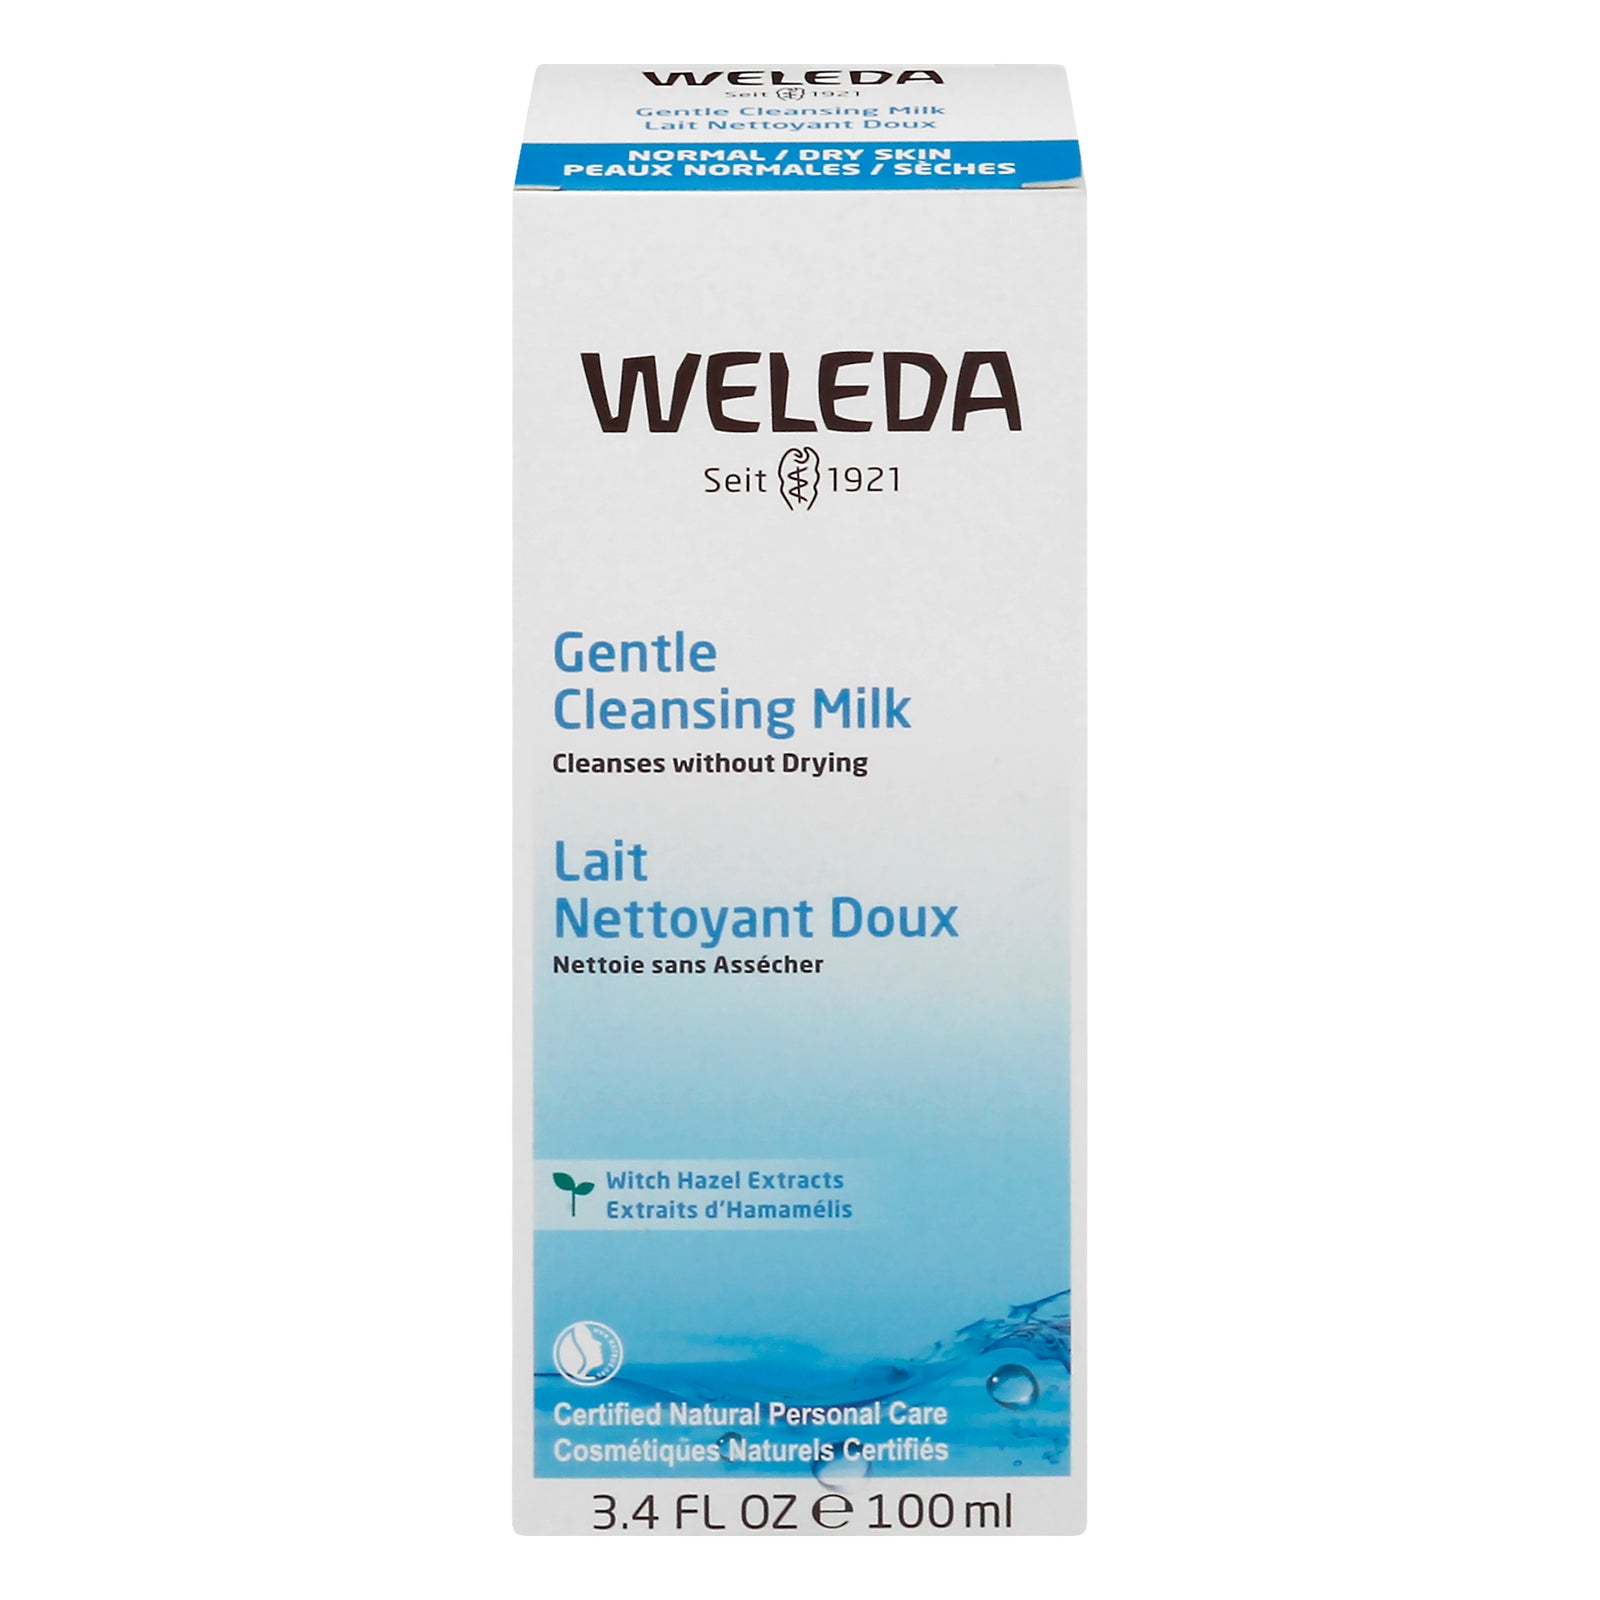 Weleda Gentle Cleansing Milk - 3.4 Fl Oz